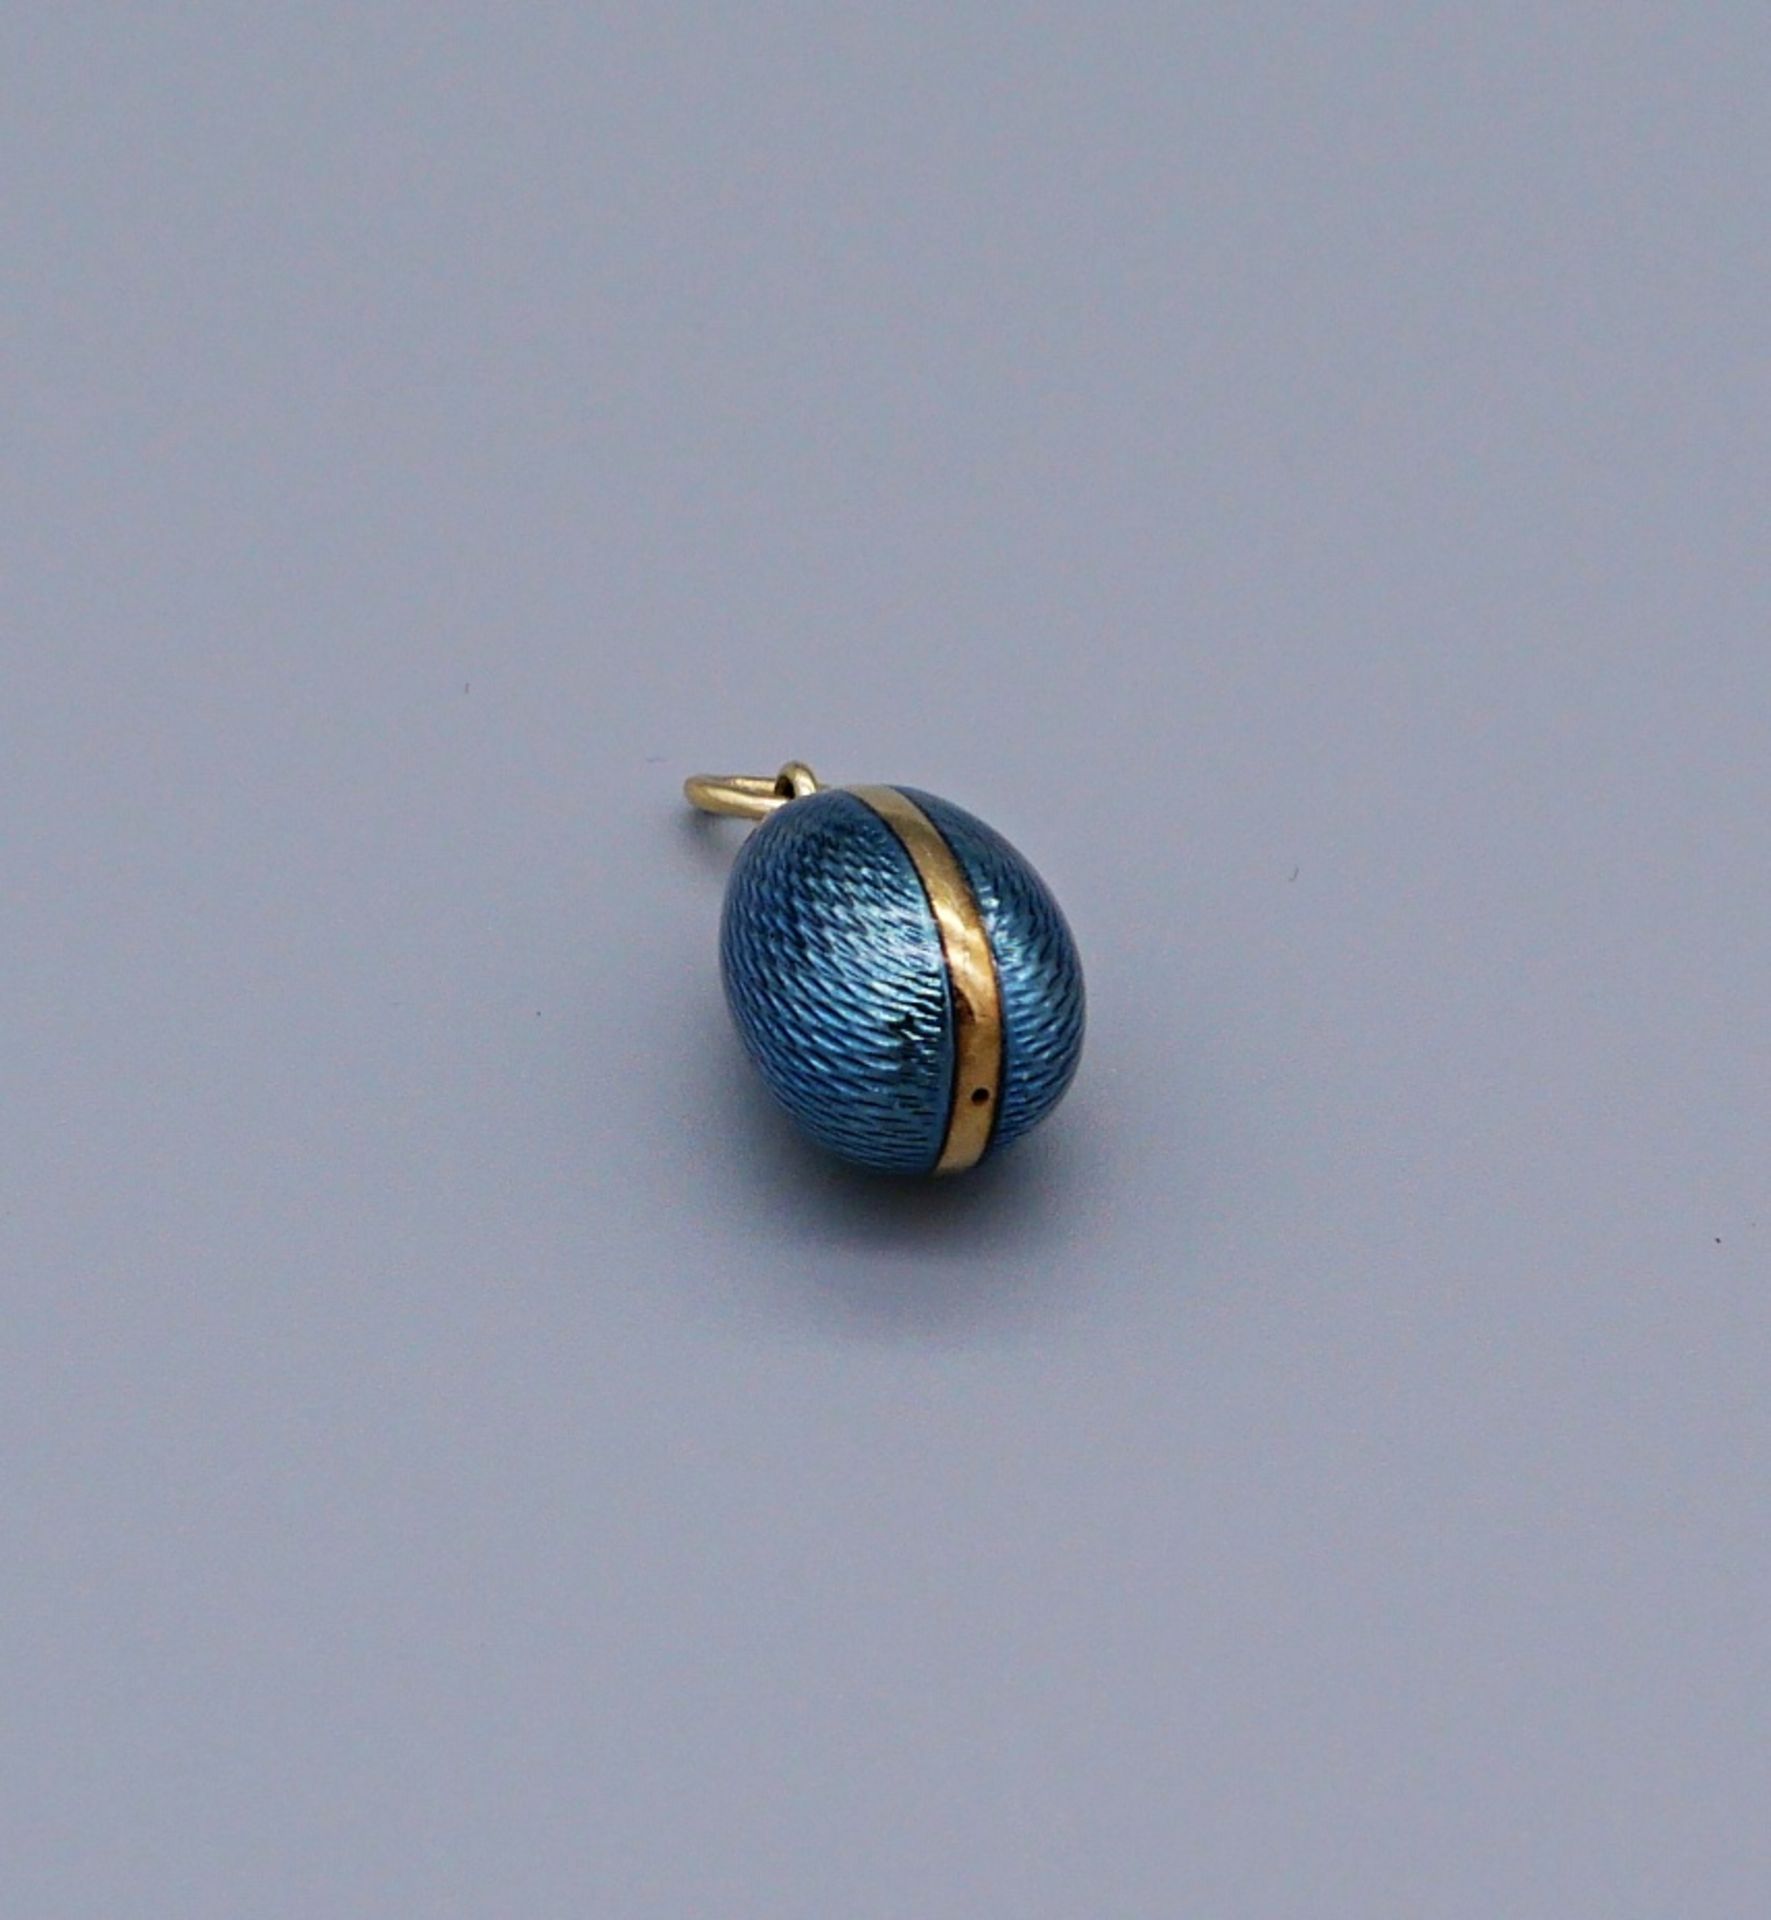 Kleines Fabergé Ei blau - Image 2 of 2